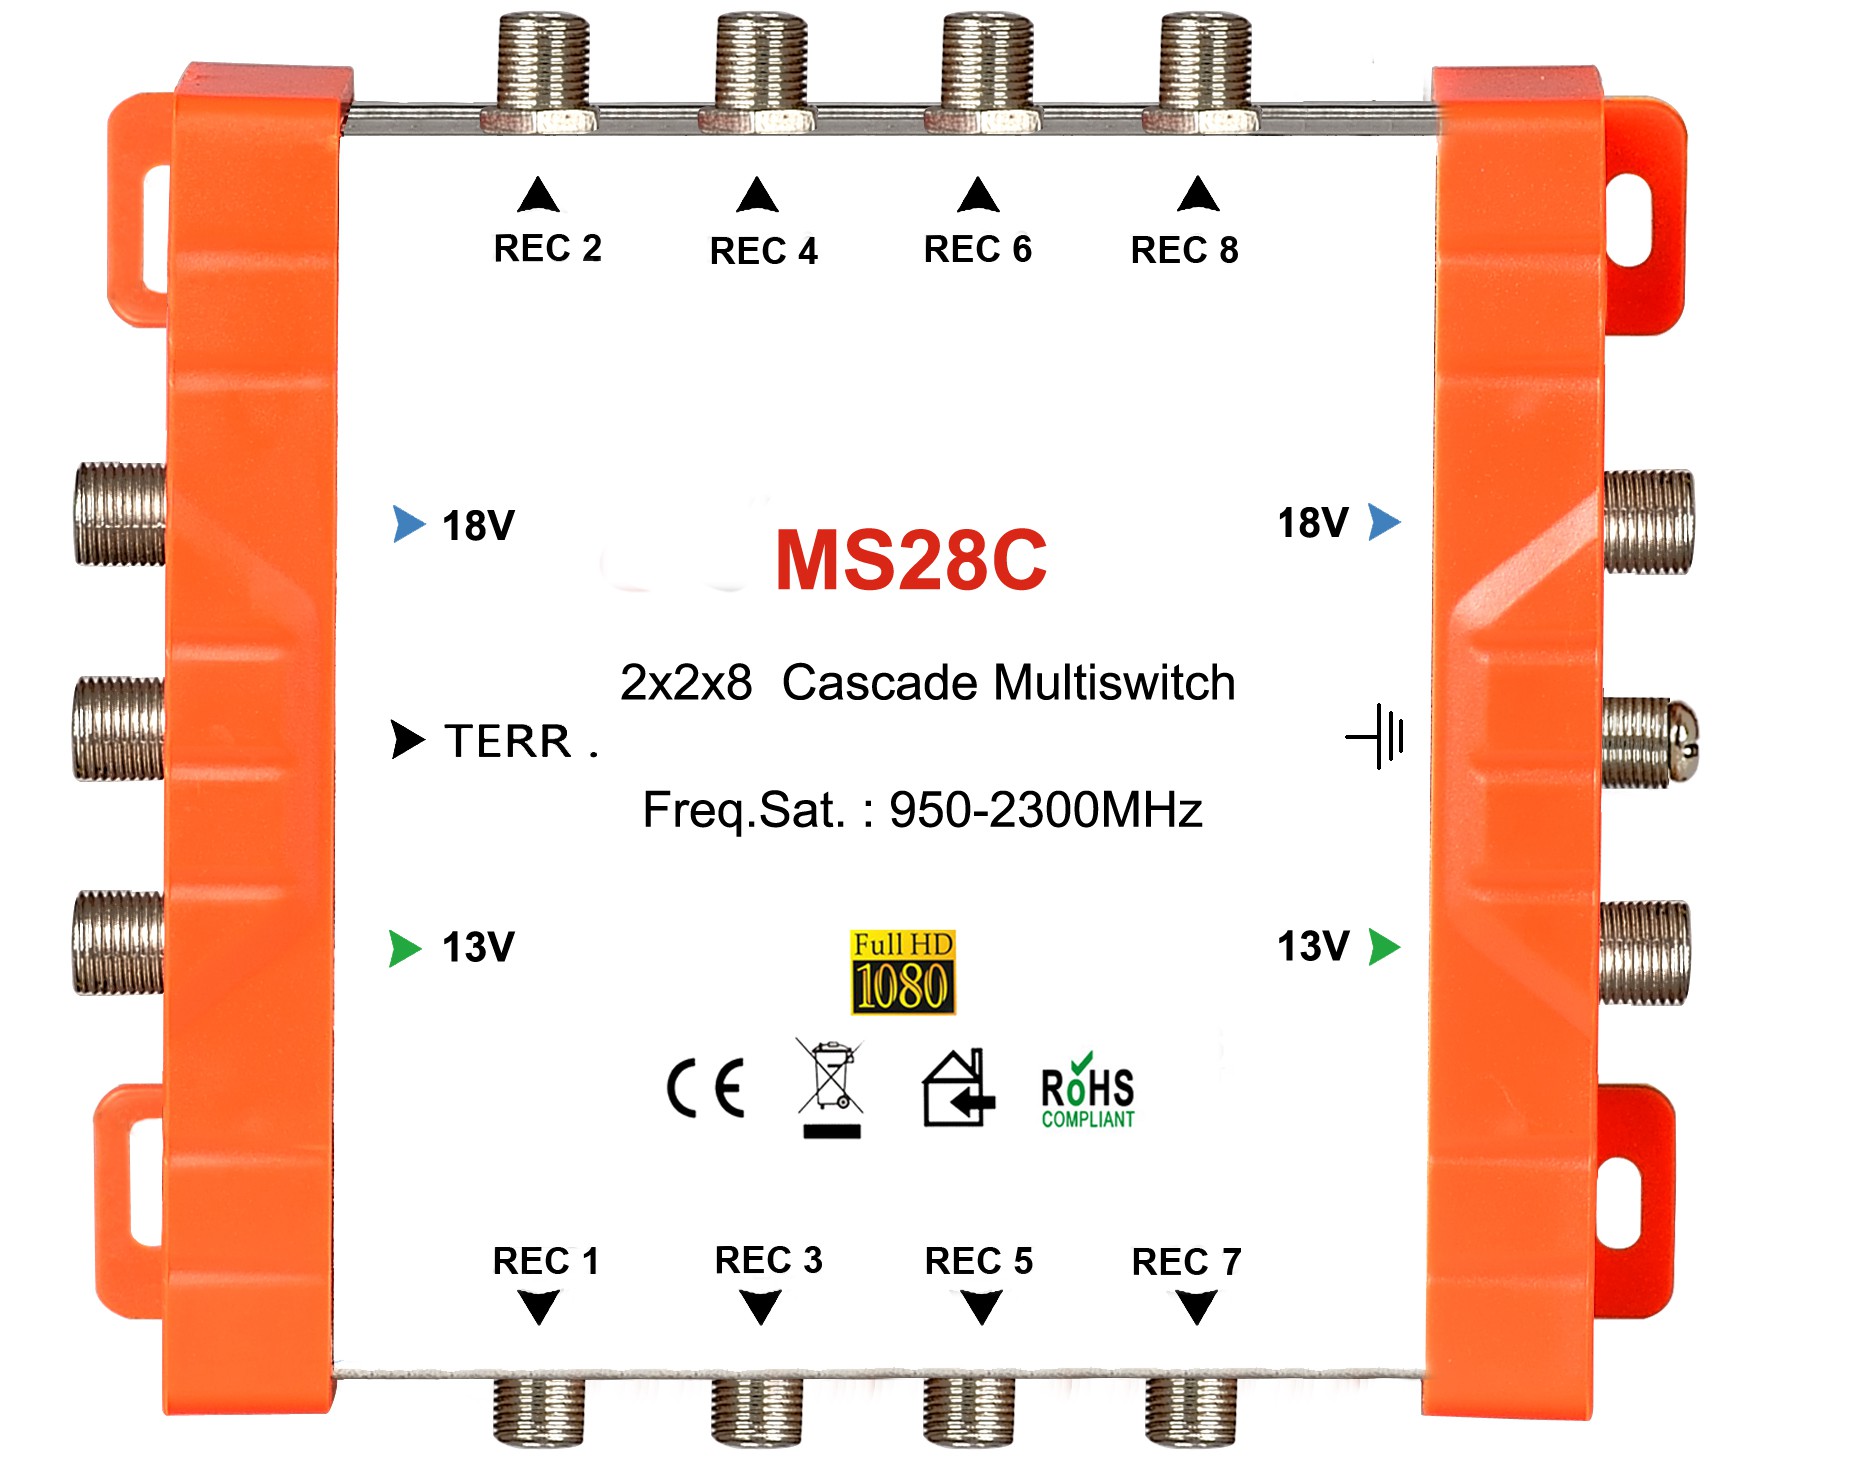 2x8 satellite multi-switch, Cascade multiswitch